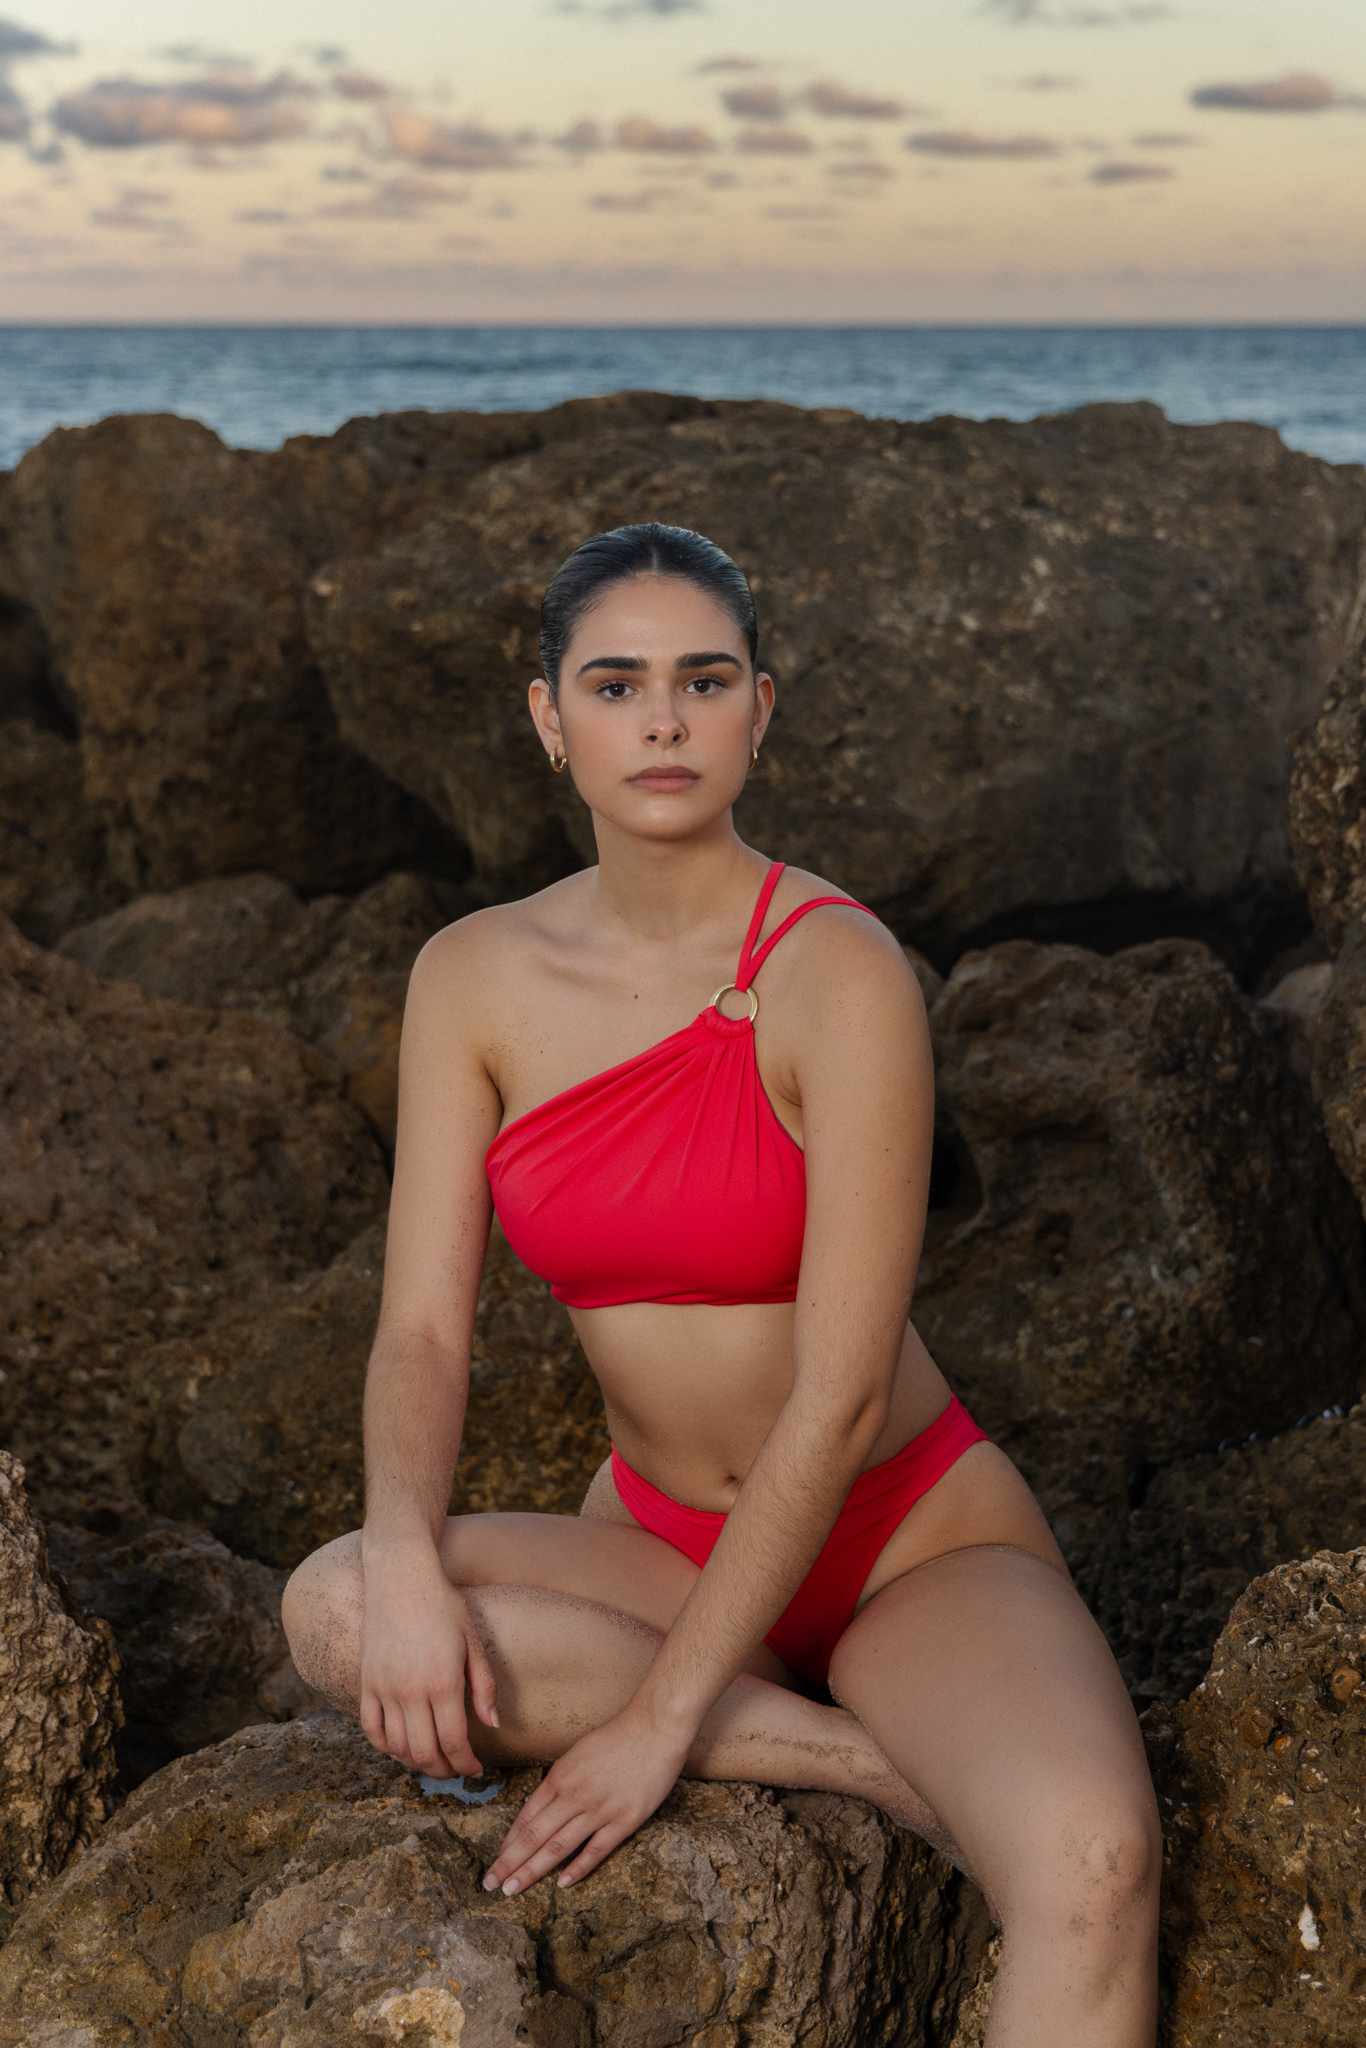 Model in red bikini sitting on beach rocks